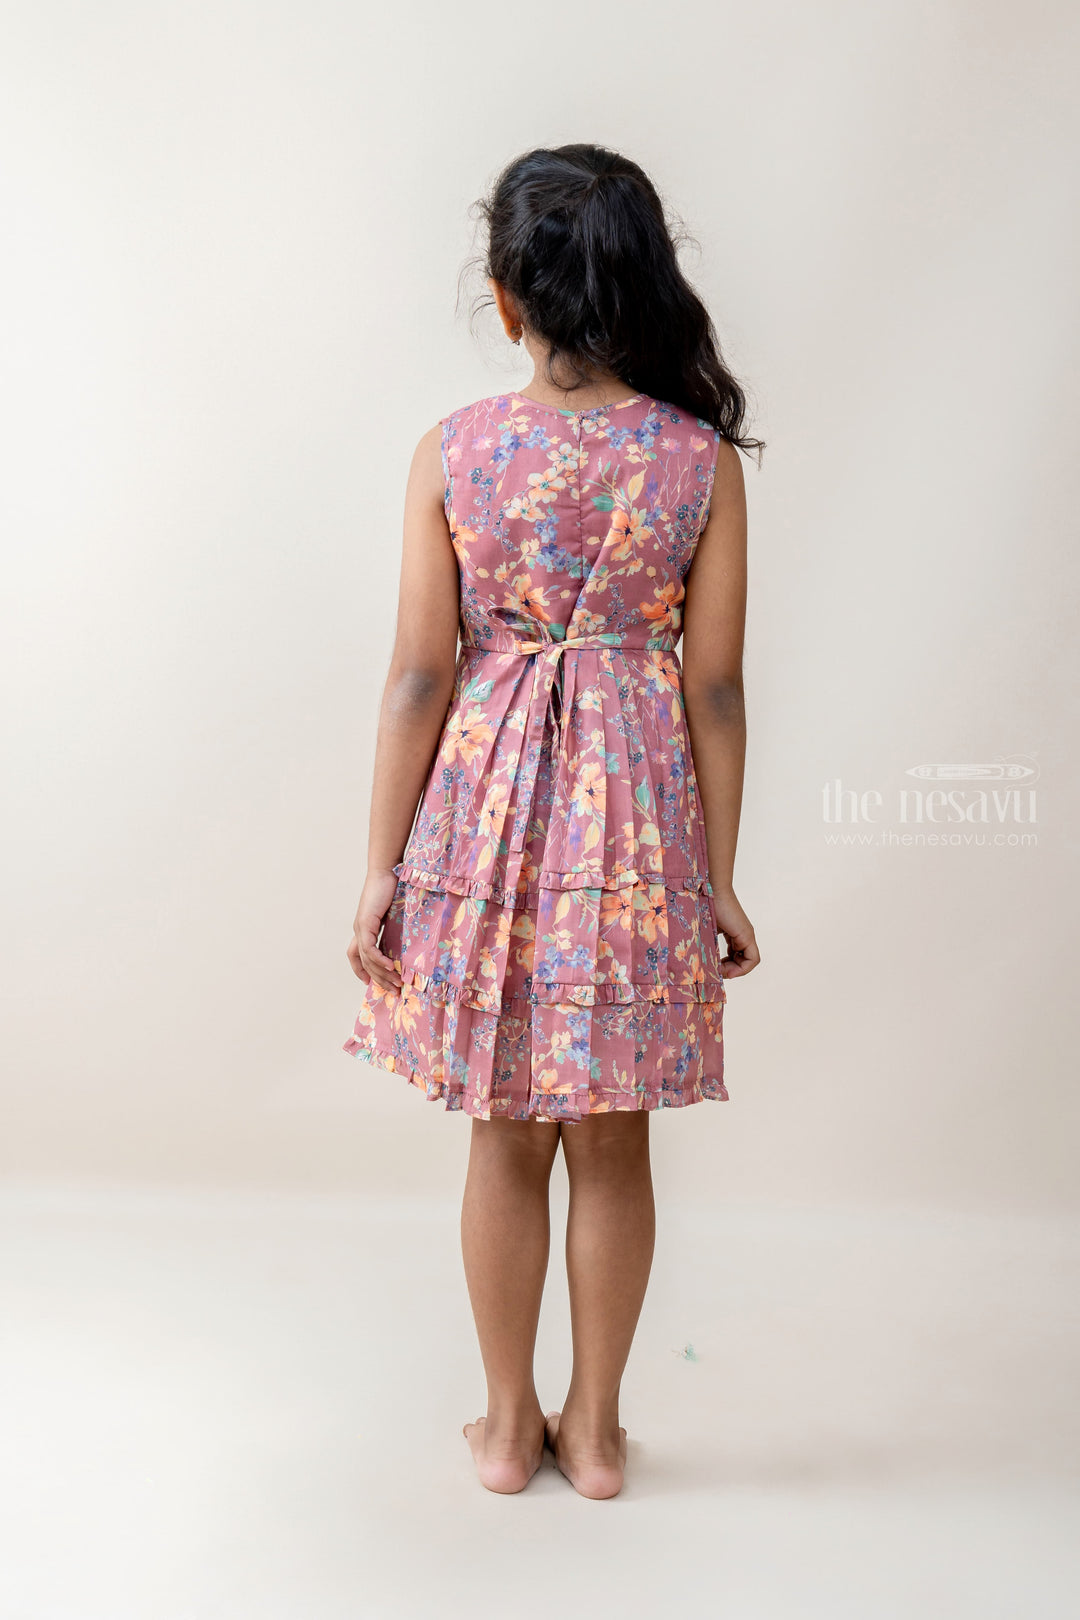 The Nesavu Frocks & Dresses Digital Printed Cambric Cotton A Line Casual Frock For Kids Girls psr silks Nesavu